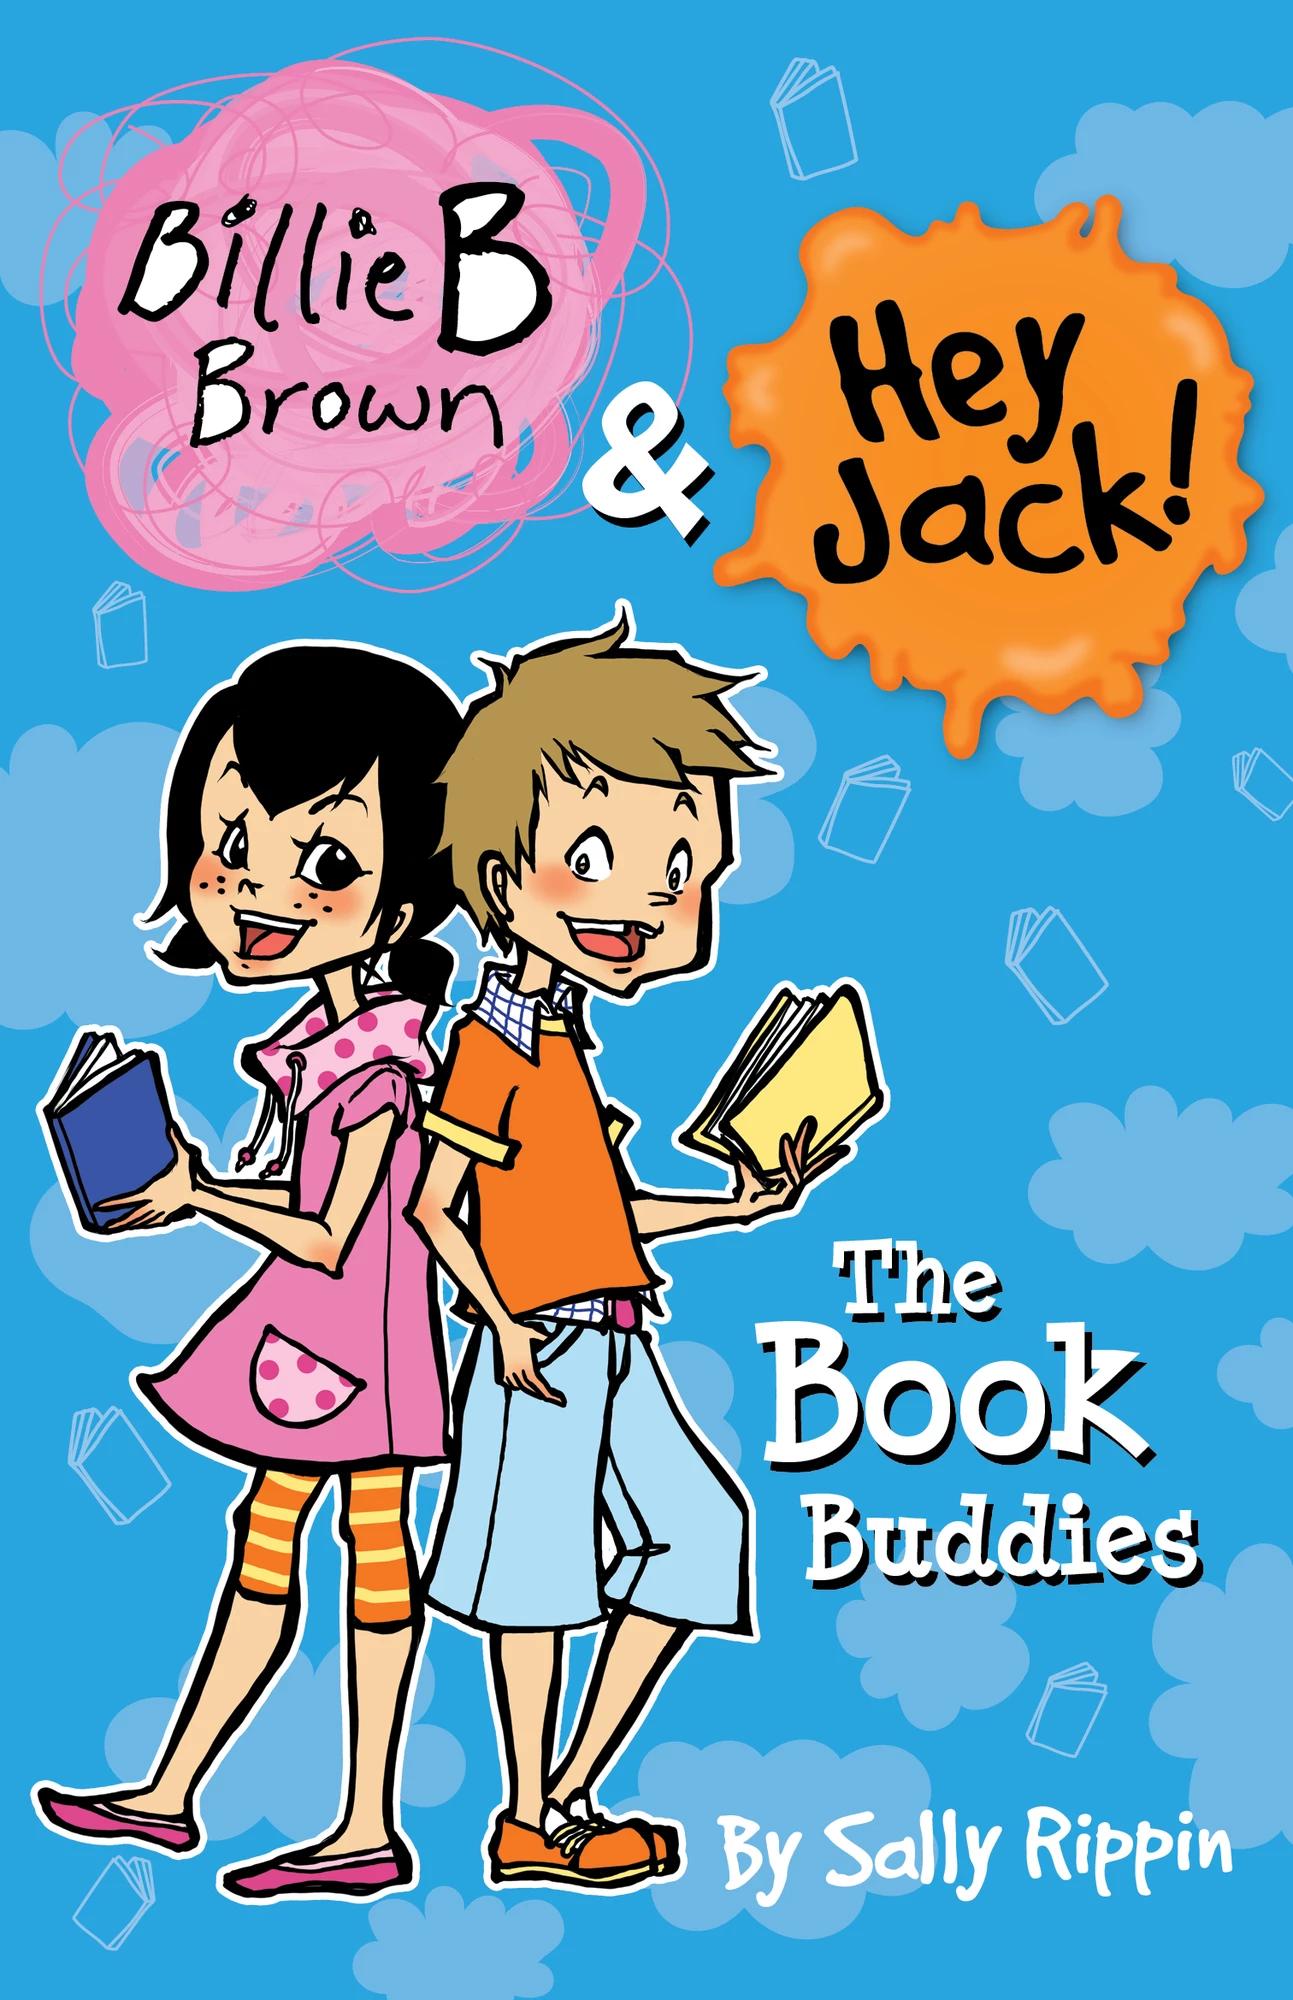 Billie B Brown u0026 Hey Jack: Book Buddies - Sally Rippin | Target Australia